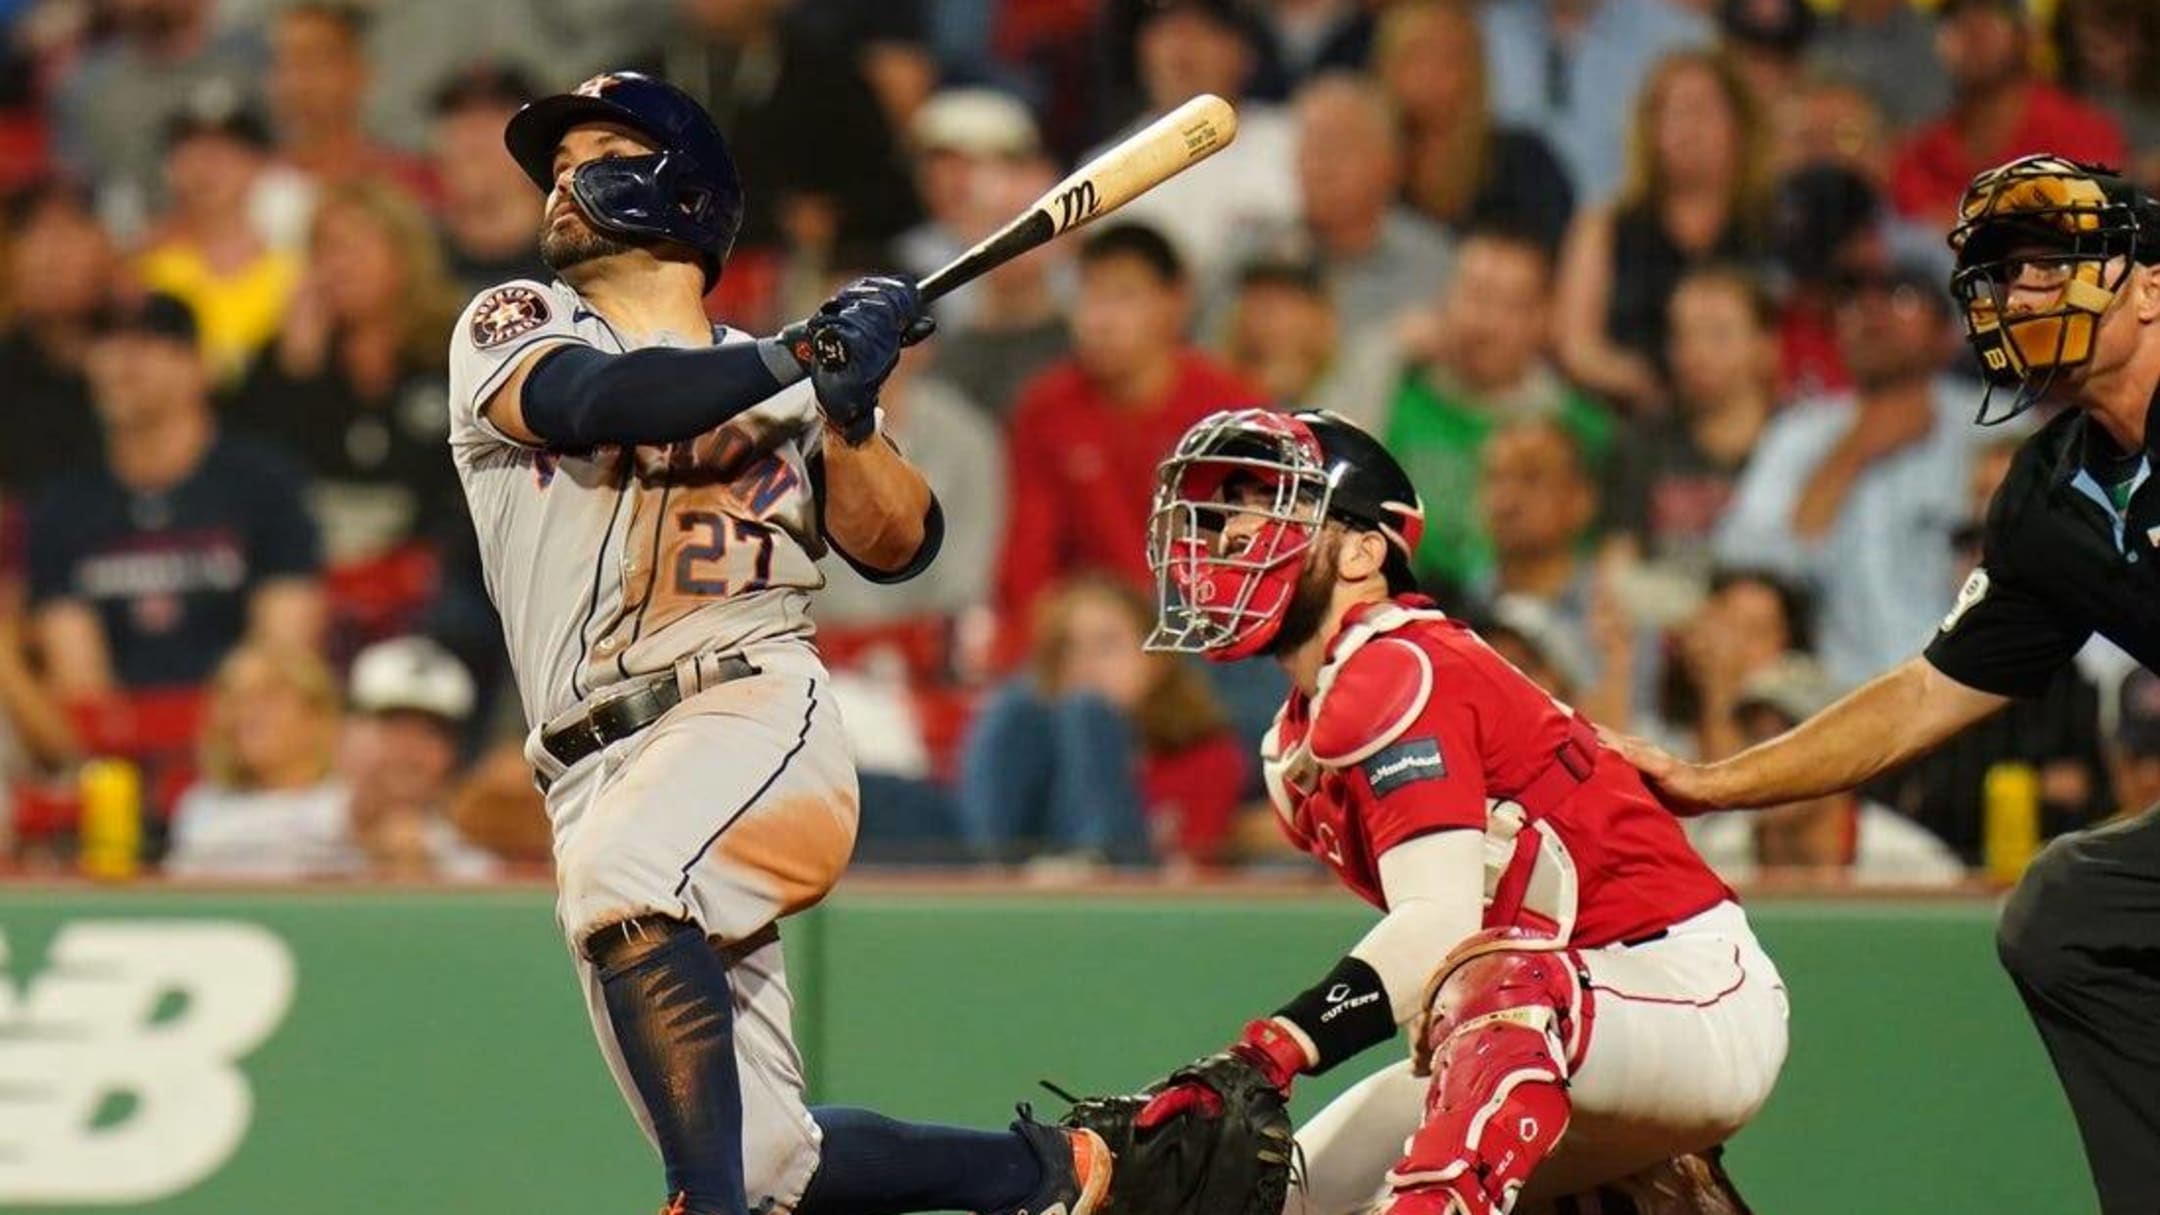 MLB roundup: Yordan Alvarez hits two HRs as Astros top Mets